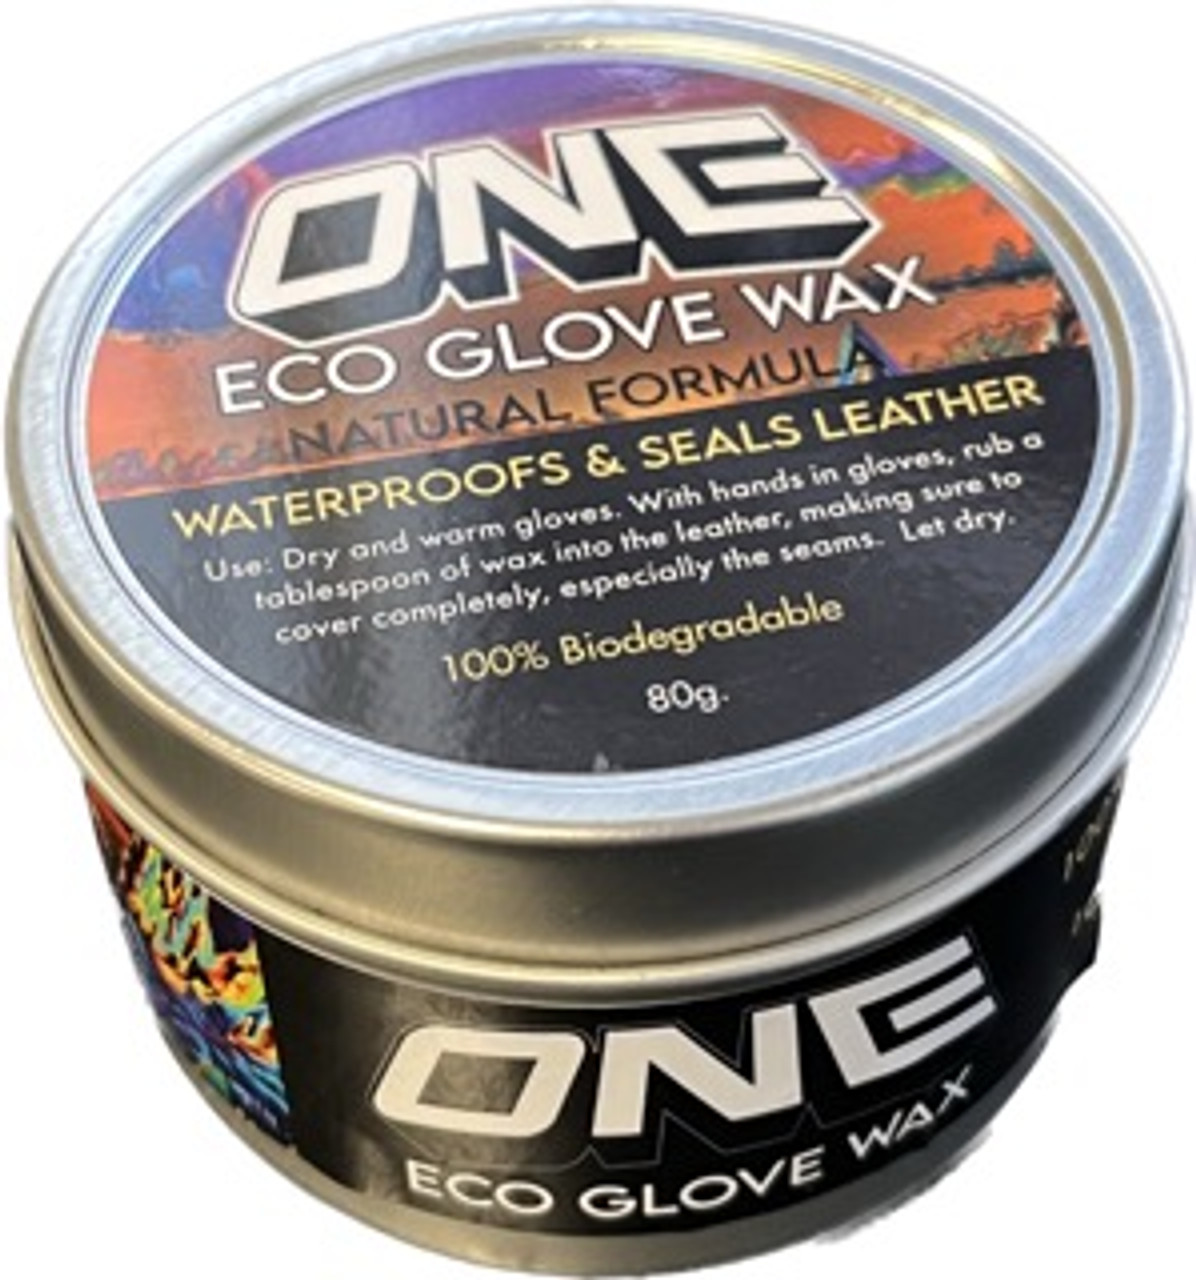 OneBall Eco Glove Wax 80g